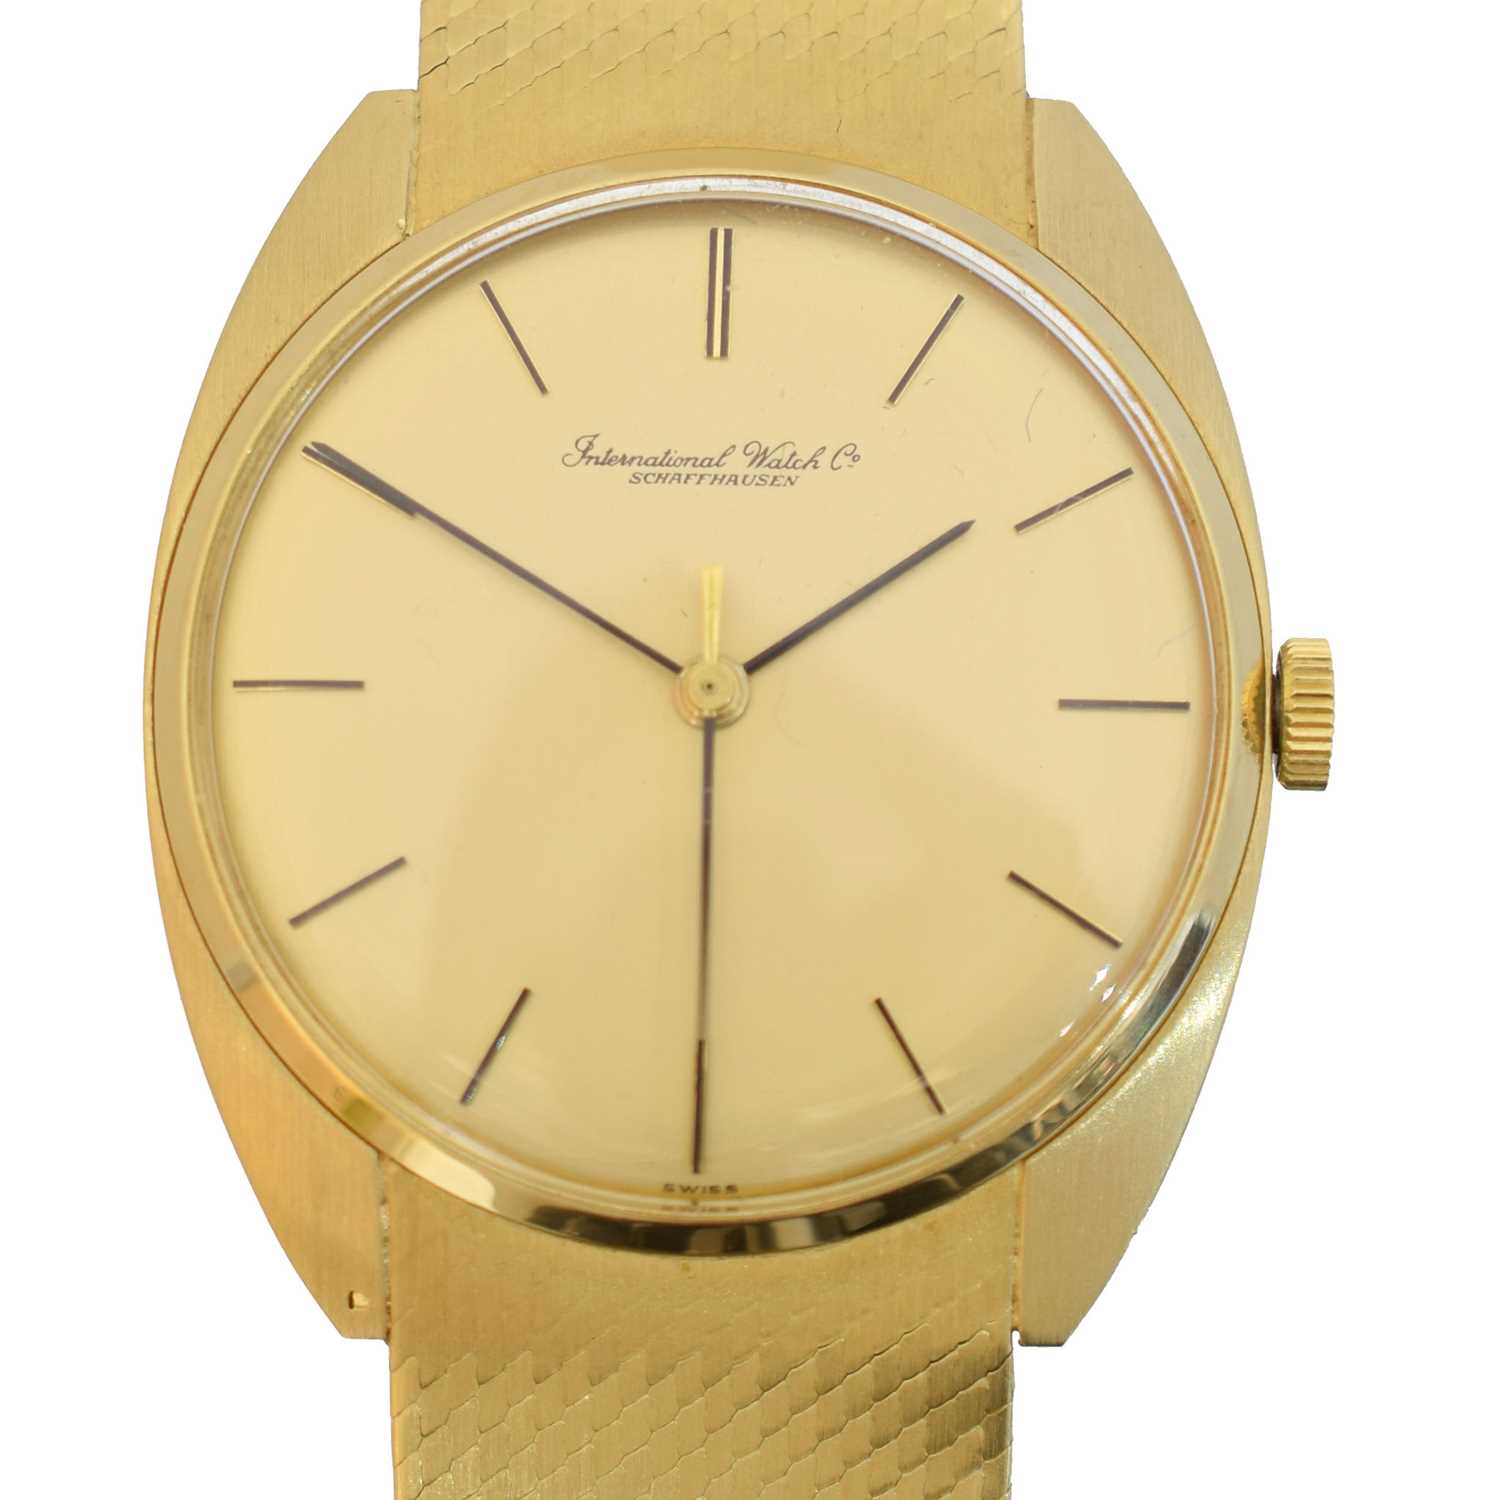 55 - An 18ct gold IWC manual wind wristwatch,